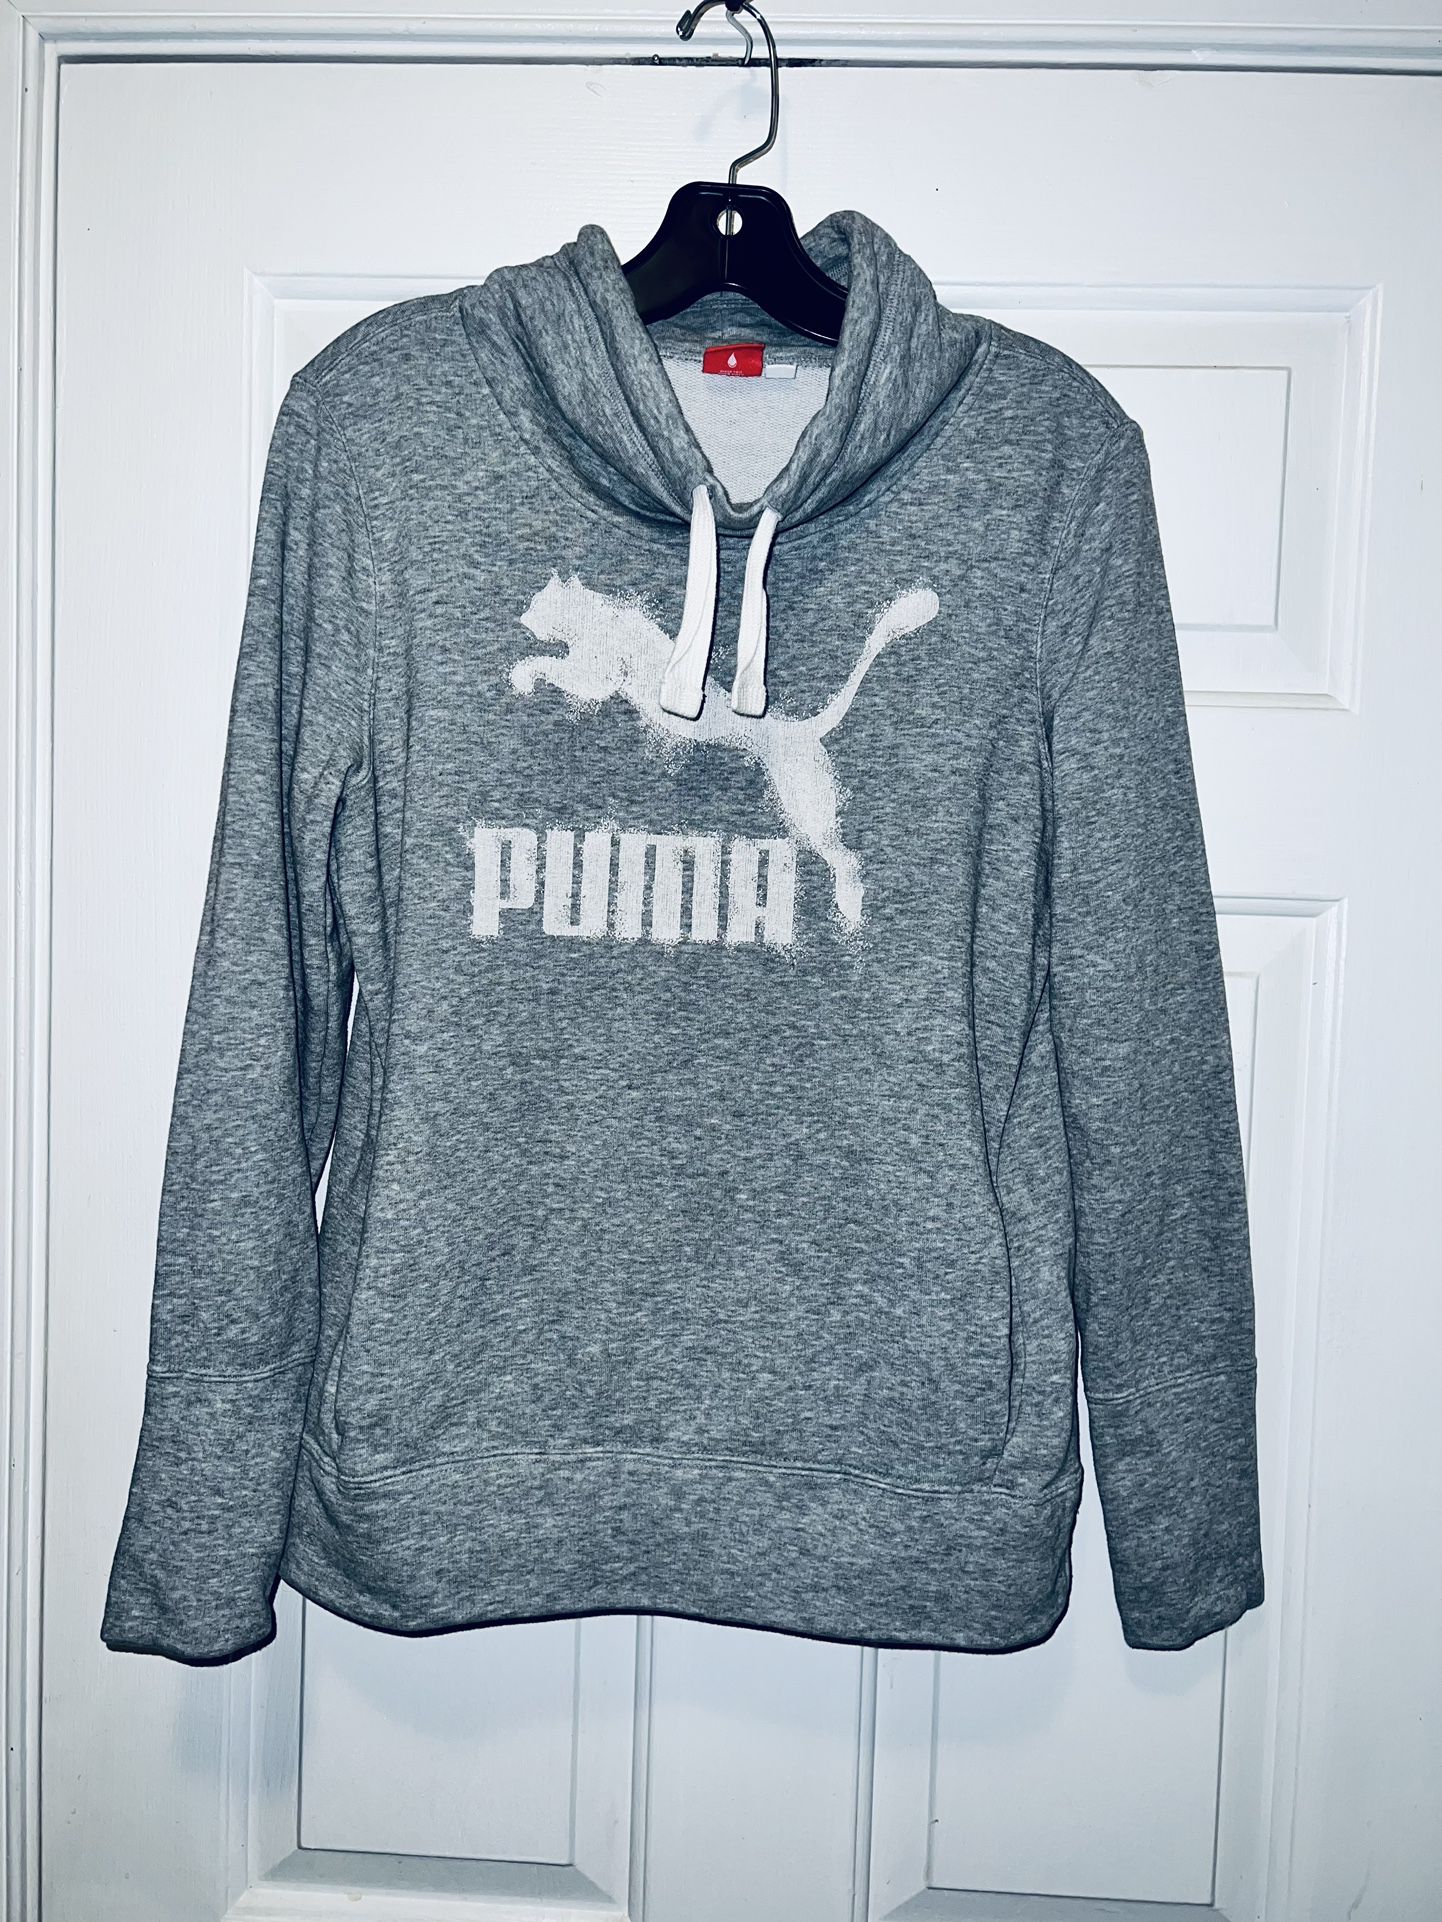 Beautiful Ladies  Gray hoodie  puma jacket sizes  (m)only $25